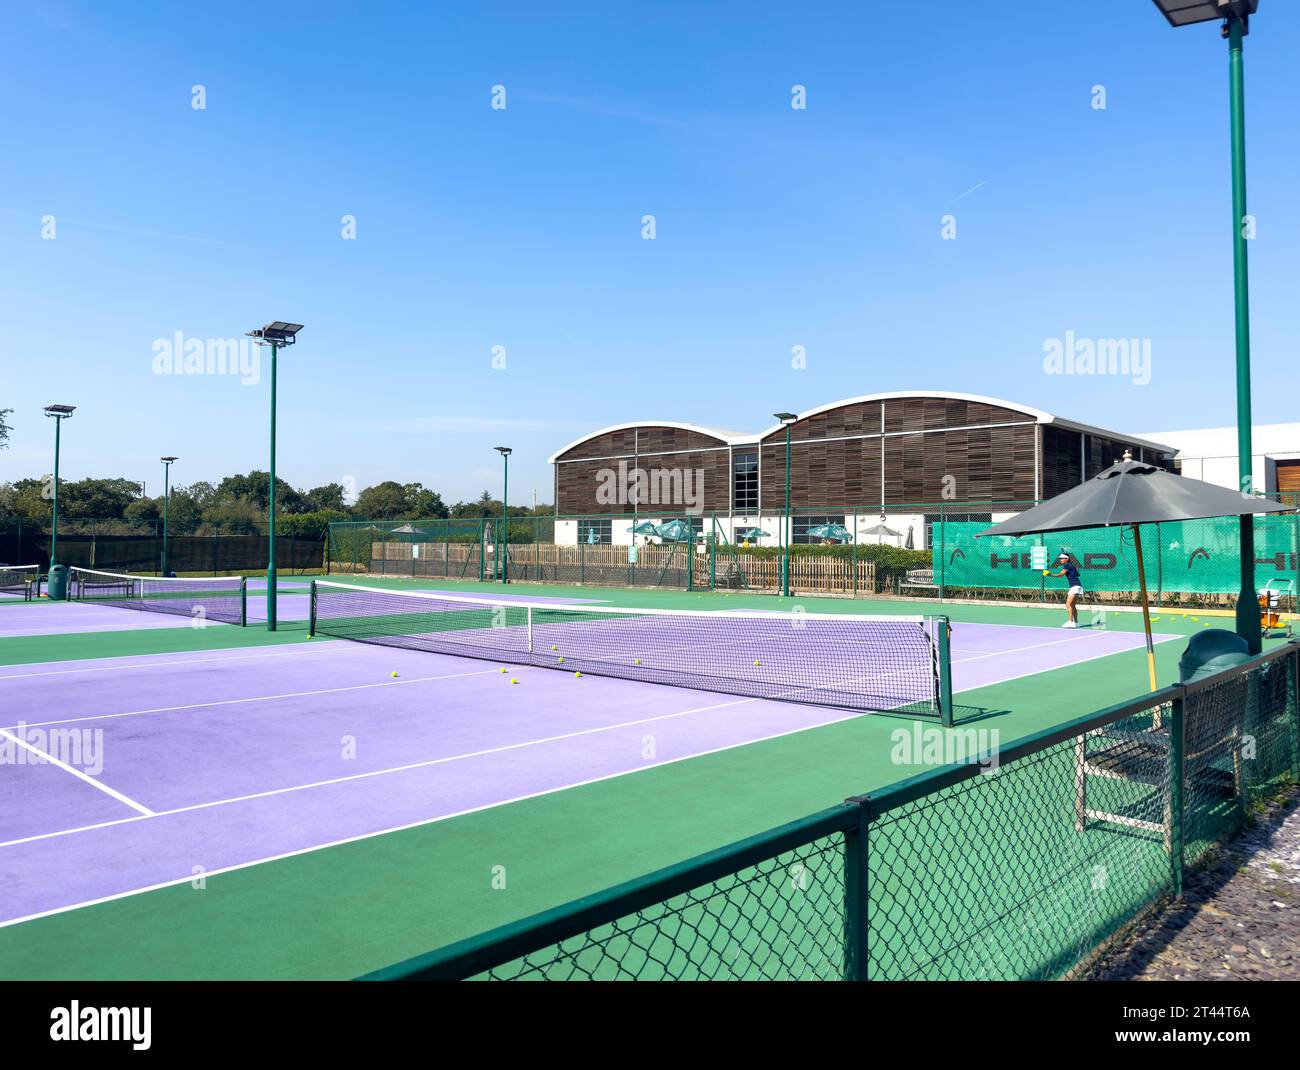 Tennis courts at David Lloyd Hampton Club, Twickenham, Borough of Richmond upon Thames, Greater London, England, United Kingdom Stock Photo